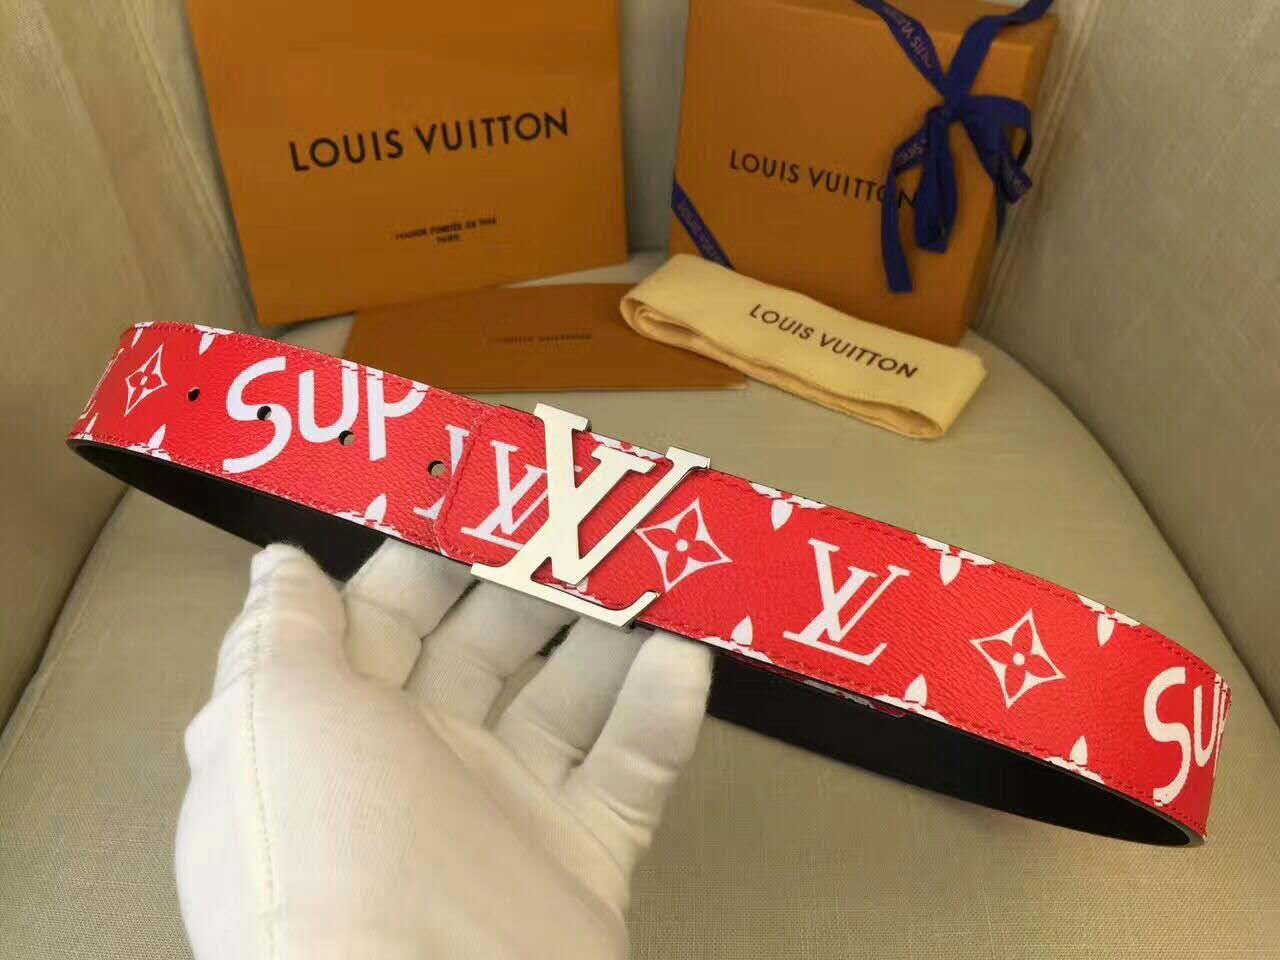 UA Replica Supreme X Louis Vuitton (LV) Belt in RED, BROWN AND